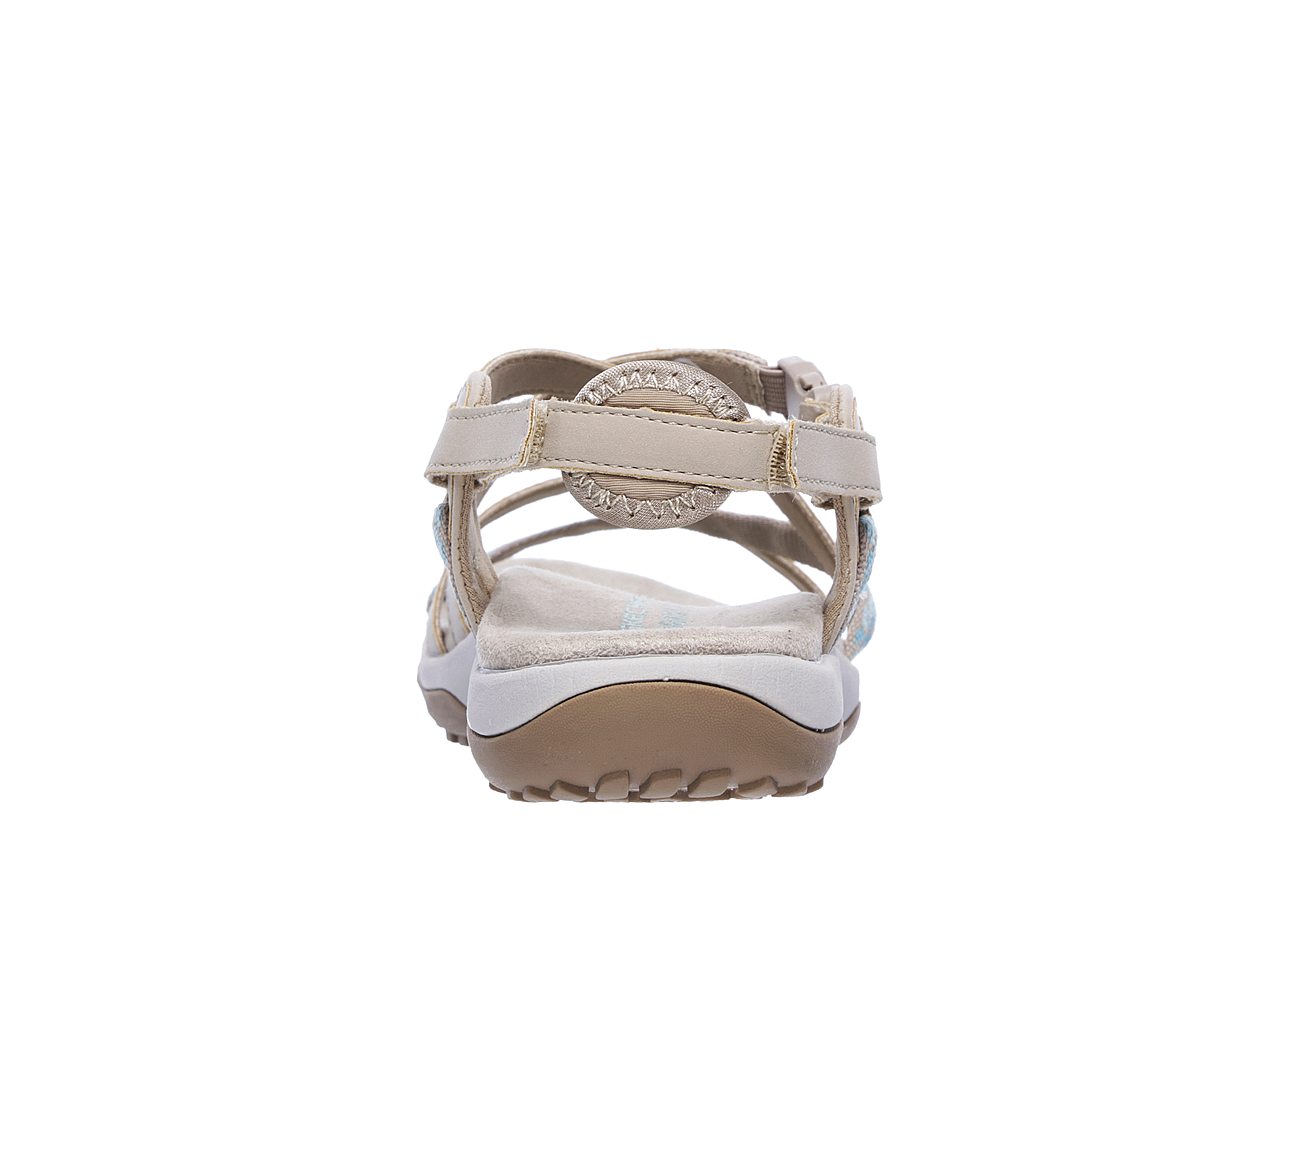 Skechers REGGAE SLIM VACAY Sandalen Modern Comfort Sandals Women beige